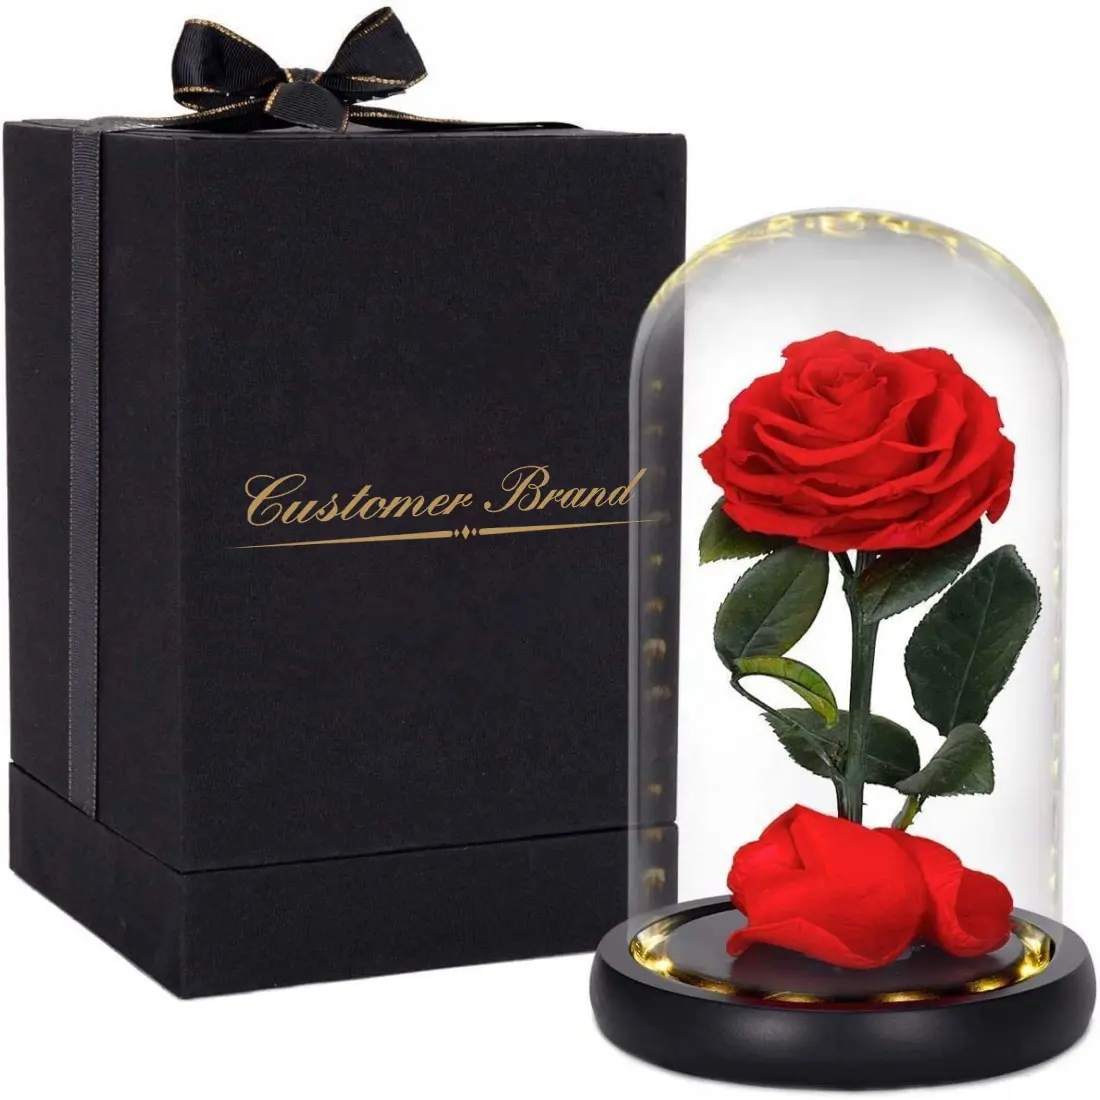 Venta al por mayor de China Rosas Eternas Preservadas Valrntine's Gif By Forever Flower Preserved Roses In Glass Dome For Mother Day